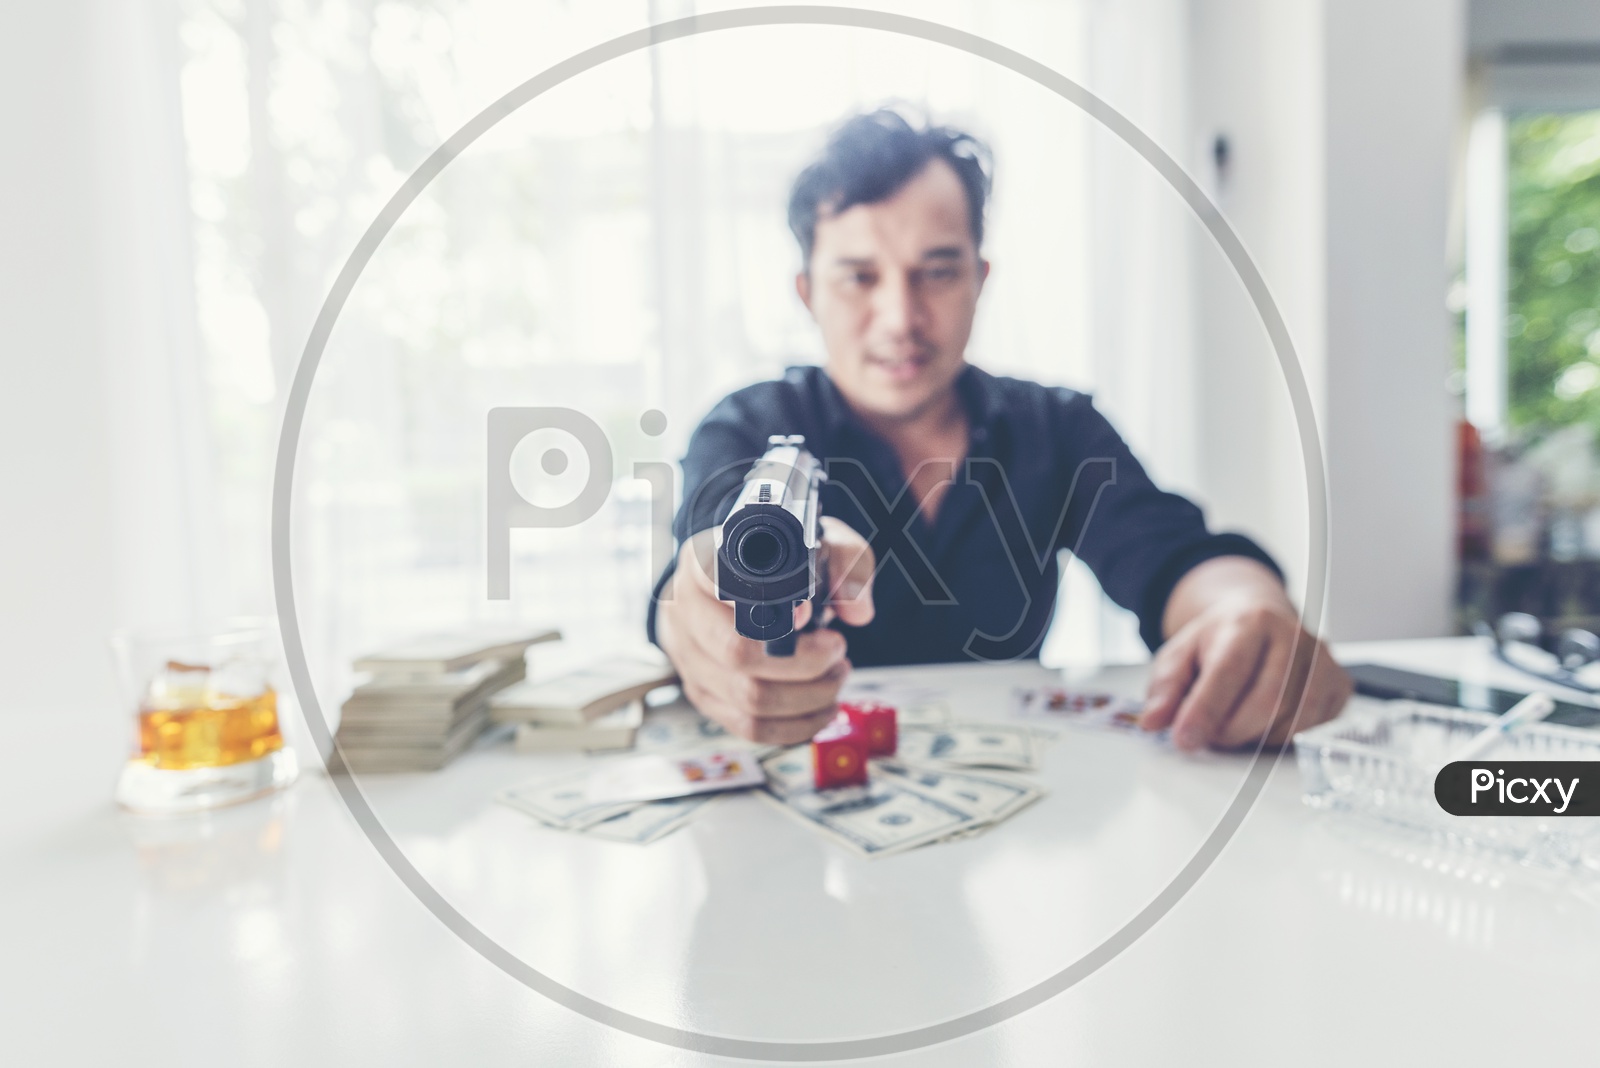 Asian businessman with his gun